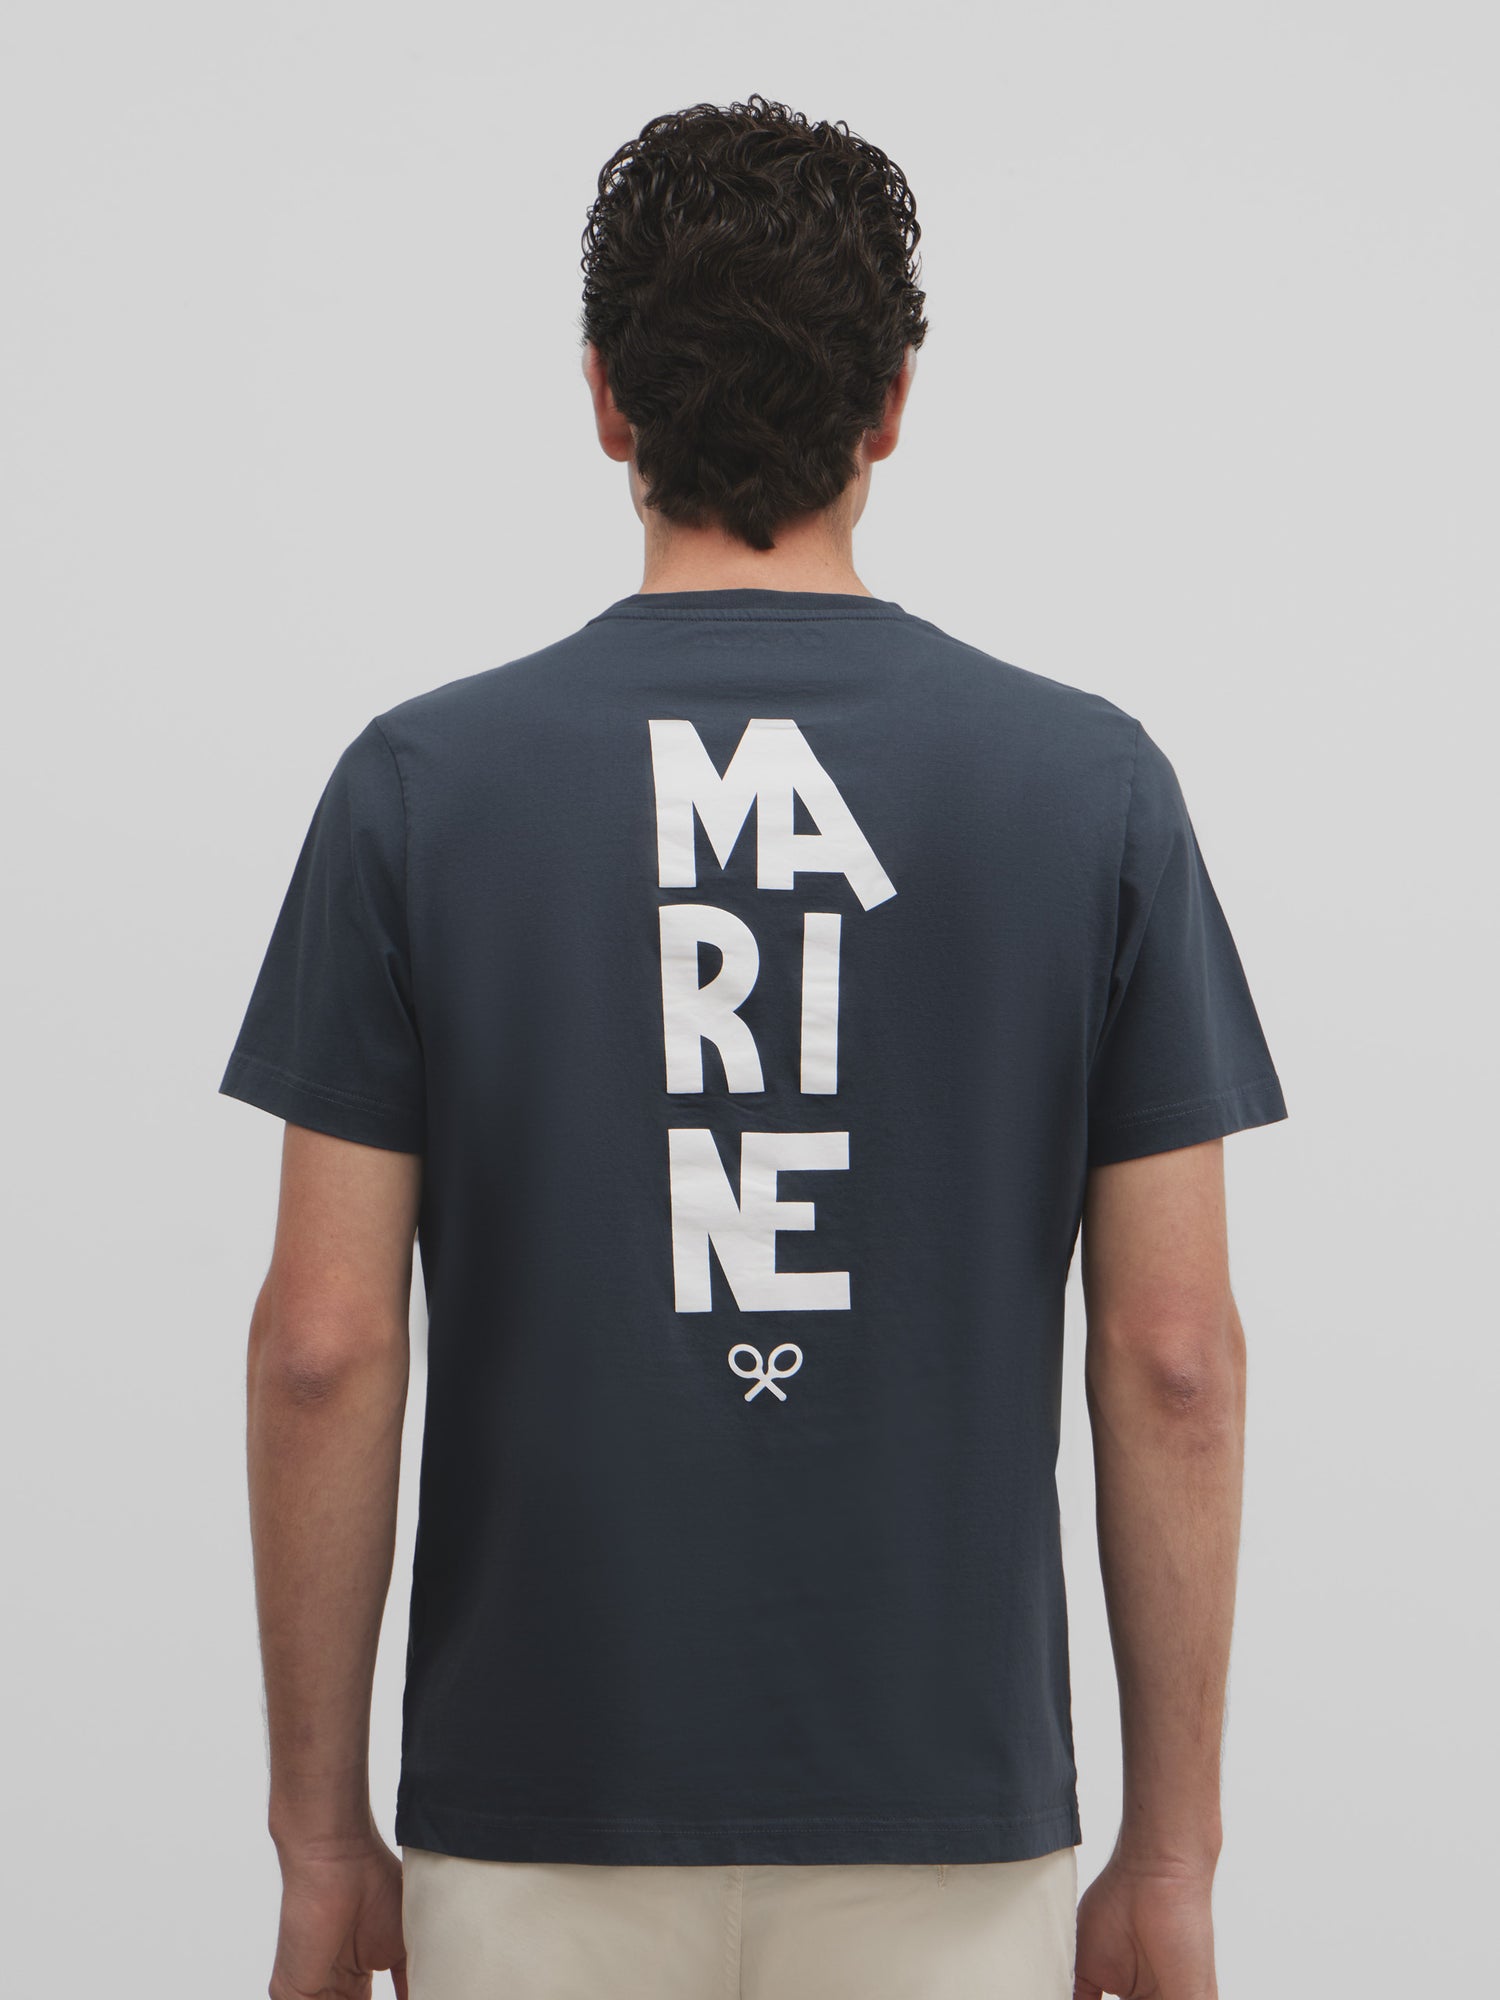 Navy blue marine t-shirt